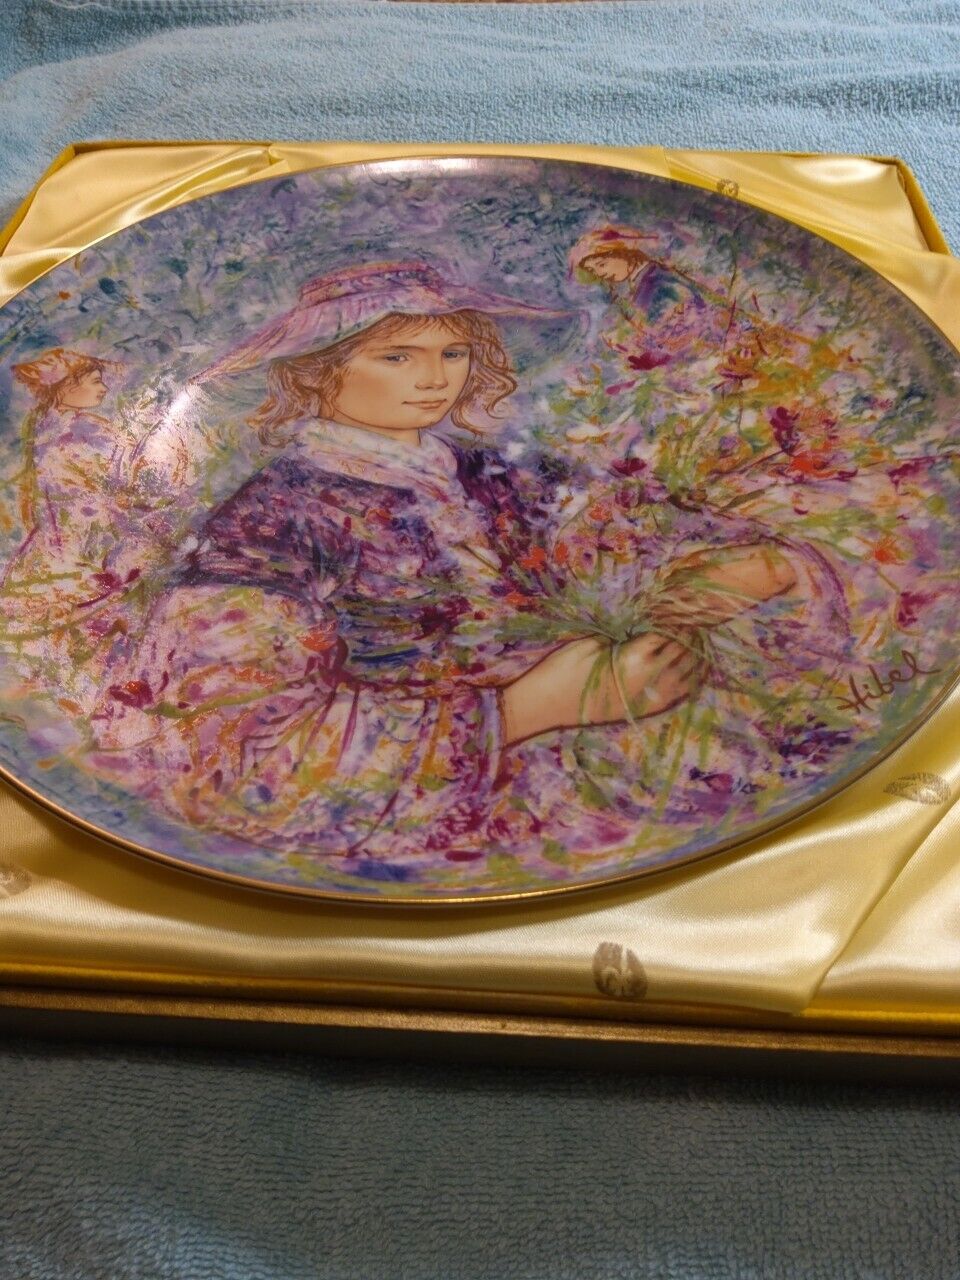 Edna Hibel FLOWER GIRL OF PROVENCE Plate - No. 9452 - Original Packaging/Inserts